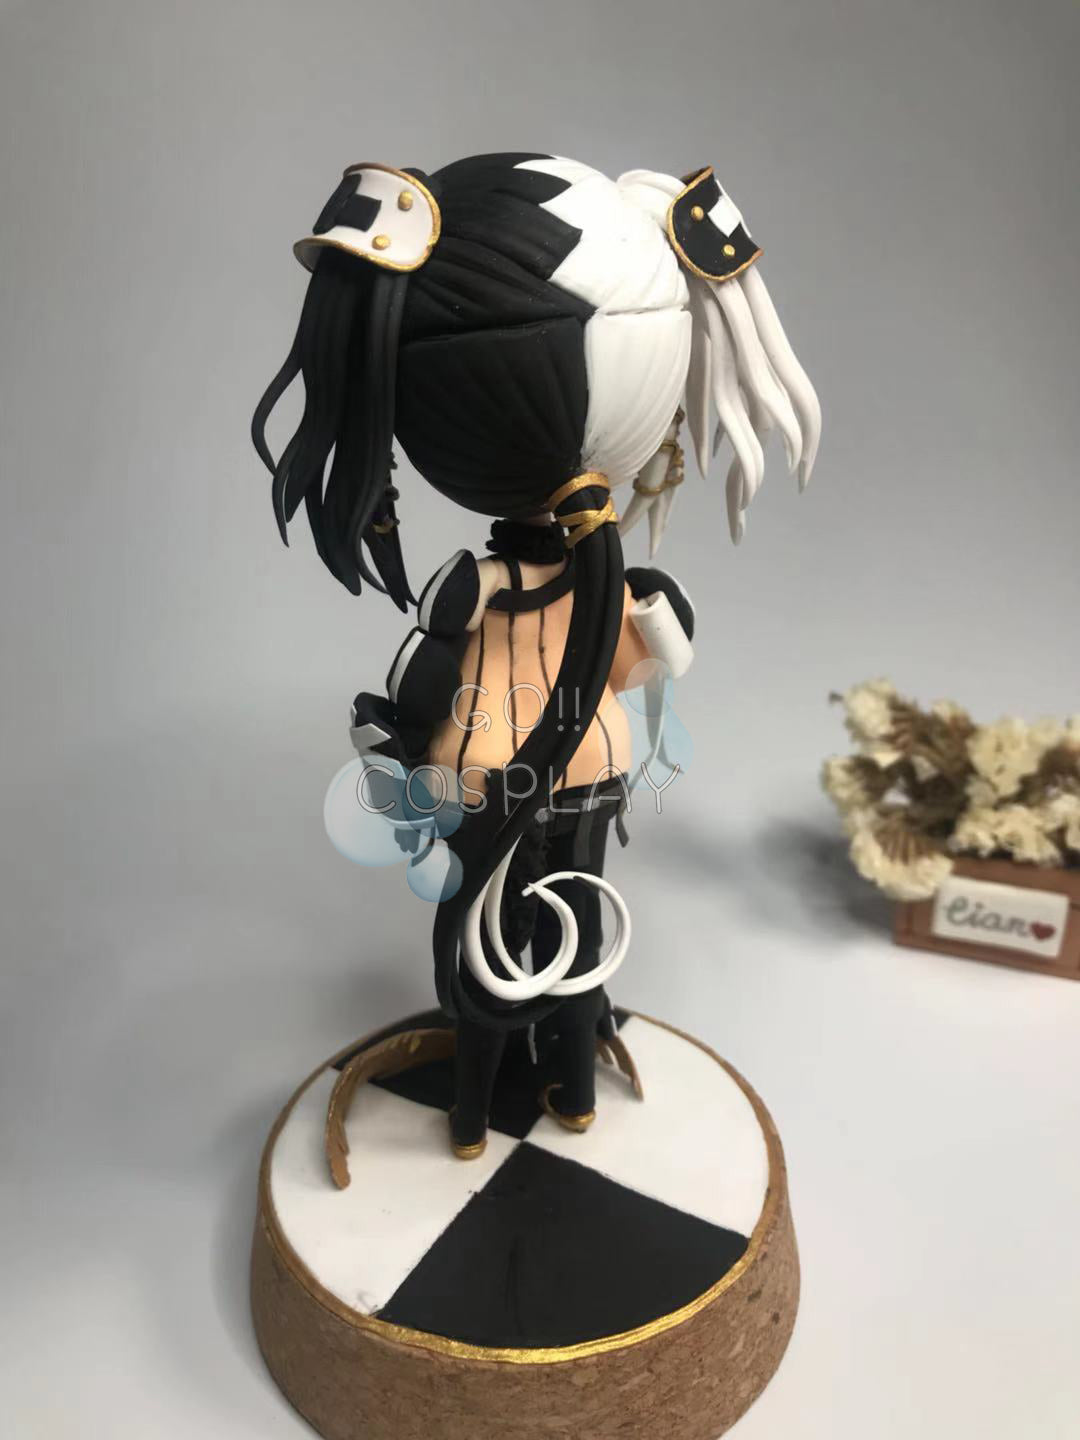 Zesshi Zetsumei Chibi Figurine